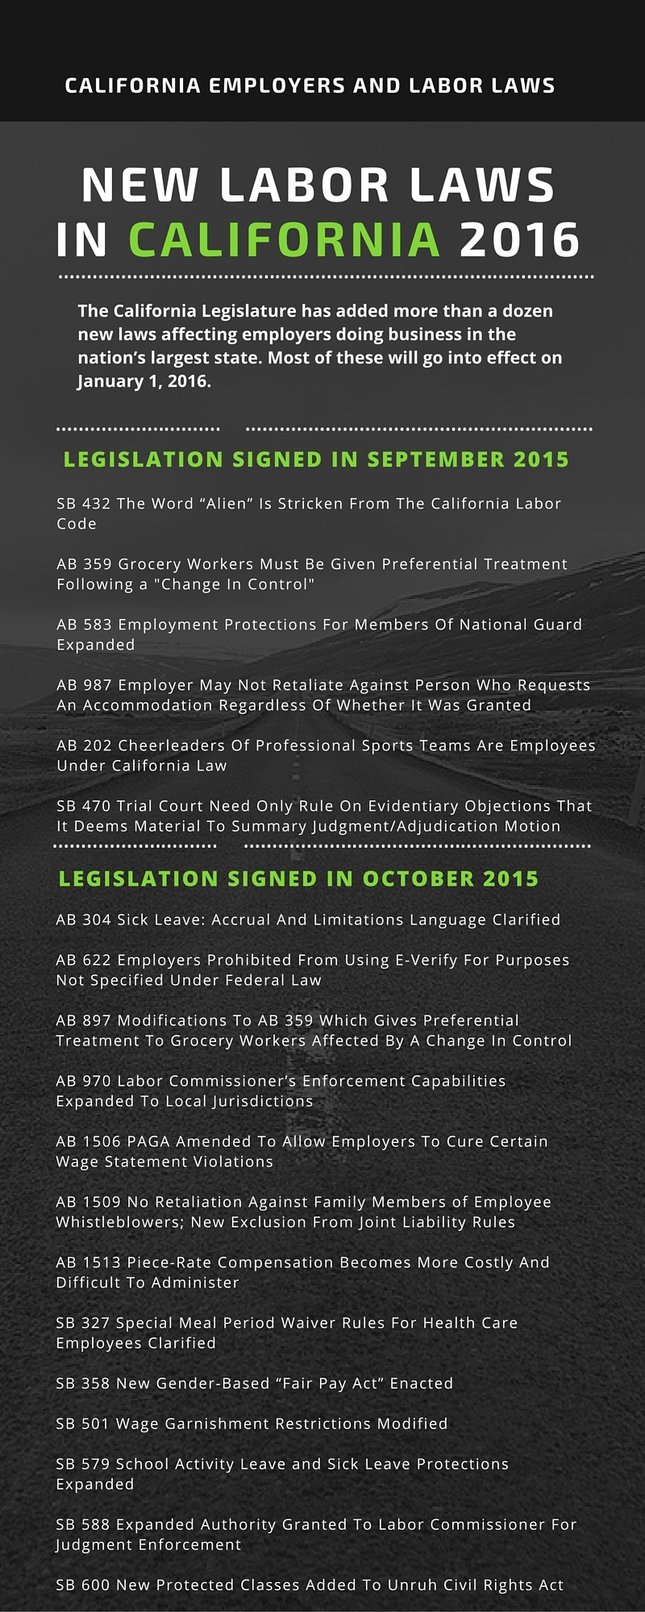 new-labor-laws-in-california-2016.jpg